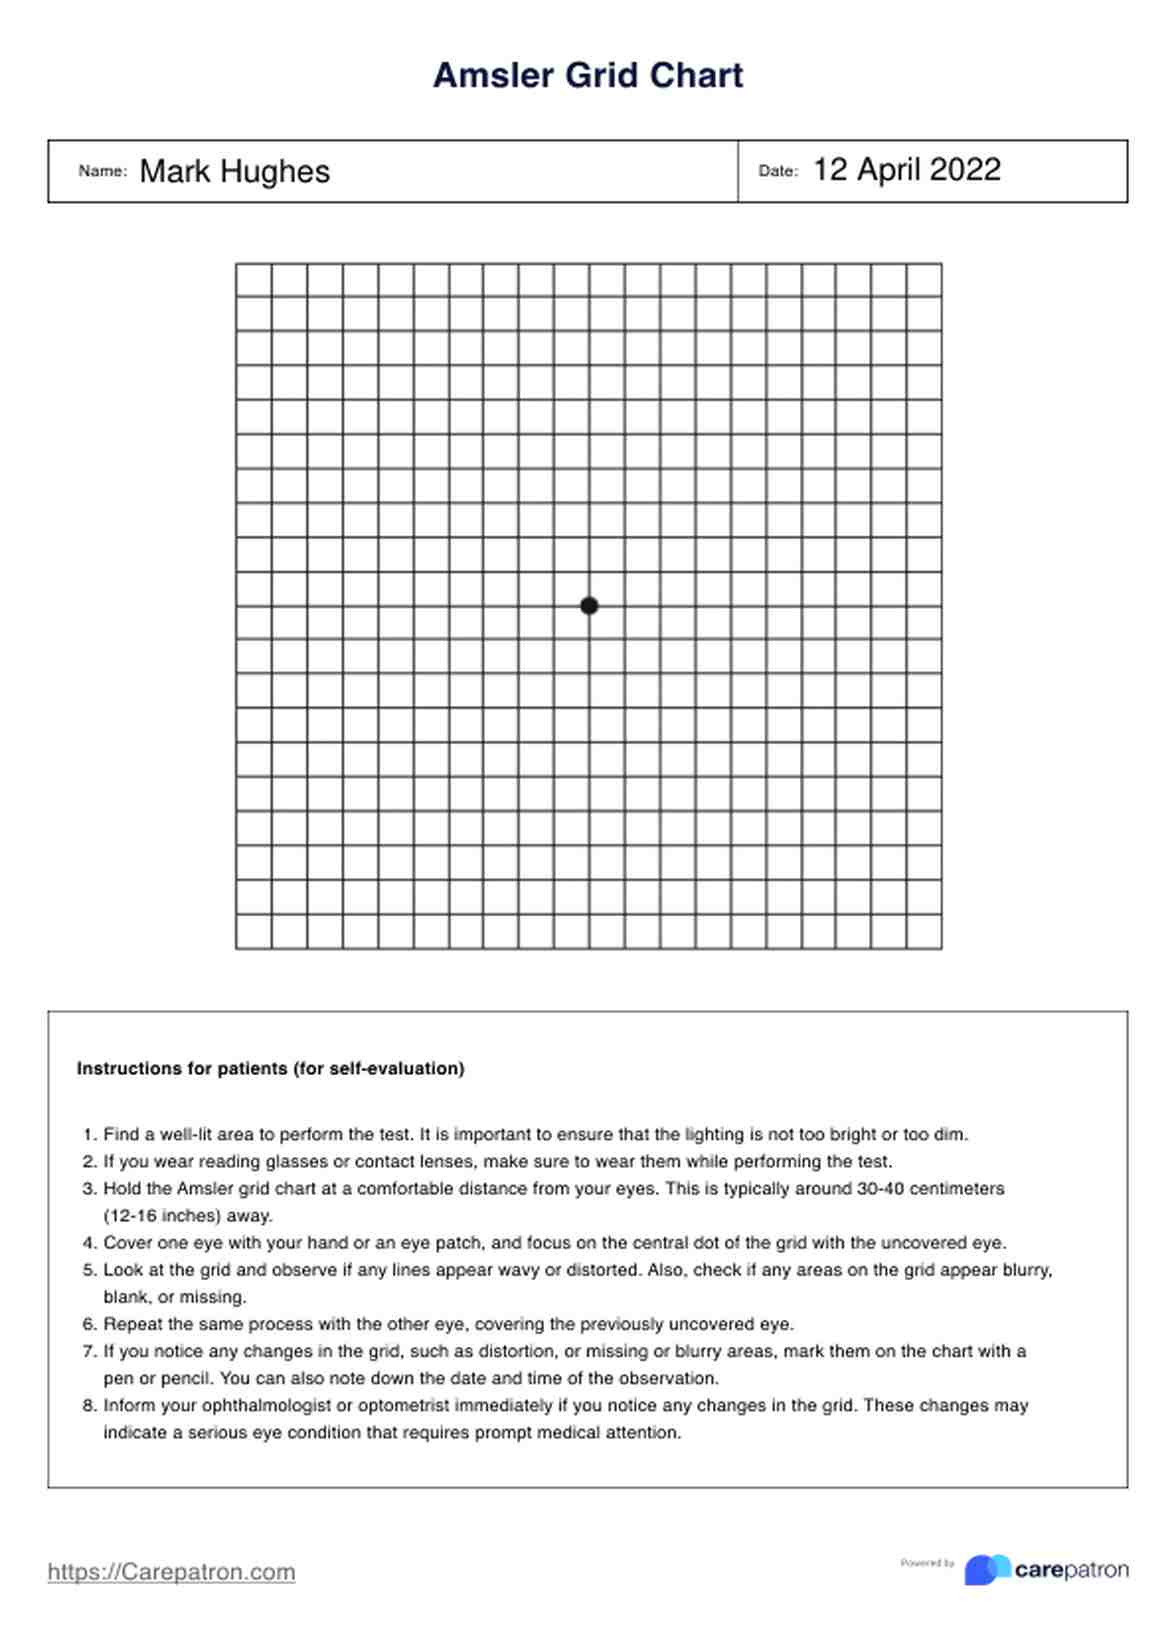 Amsler Grid Chart PDF Example